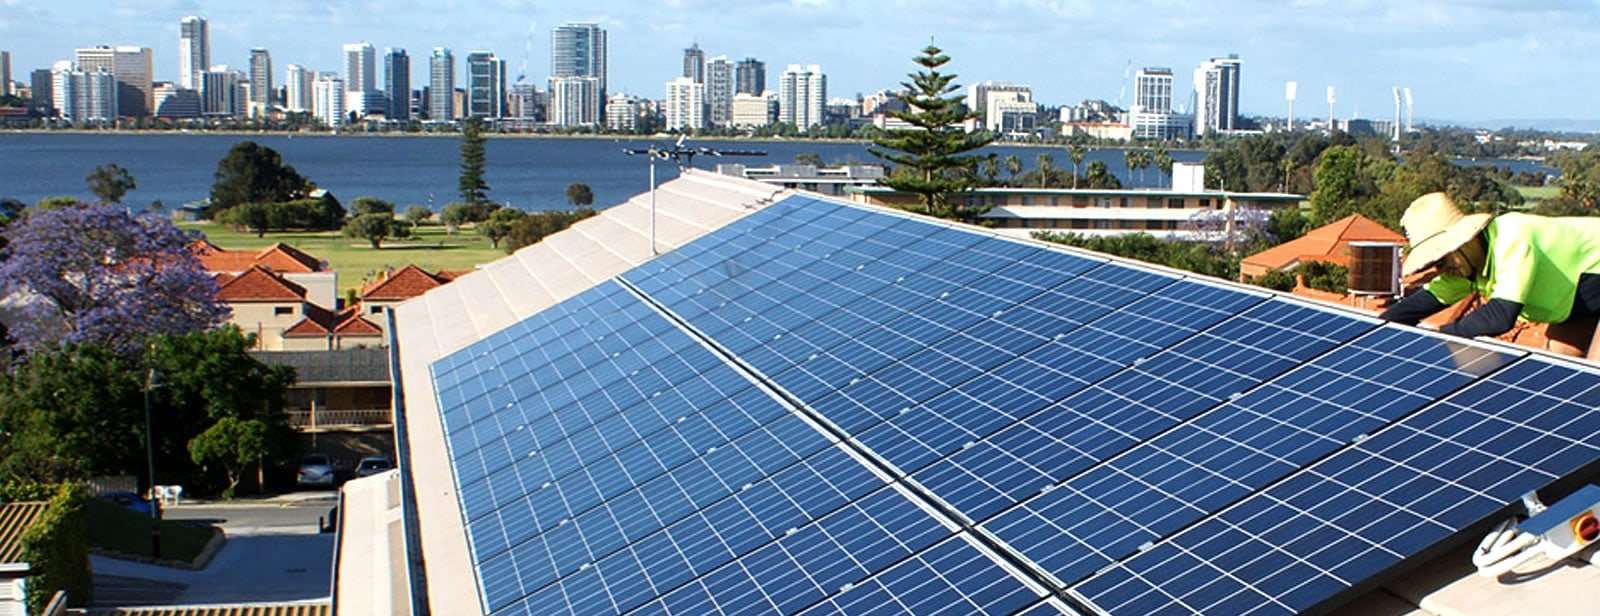 solar panel system australia